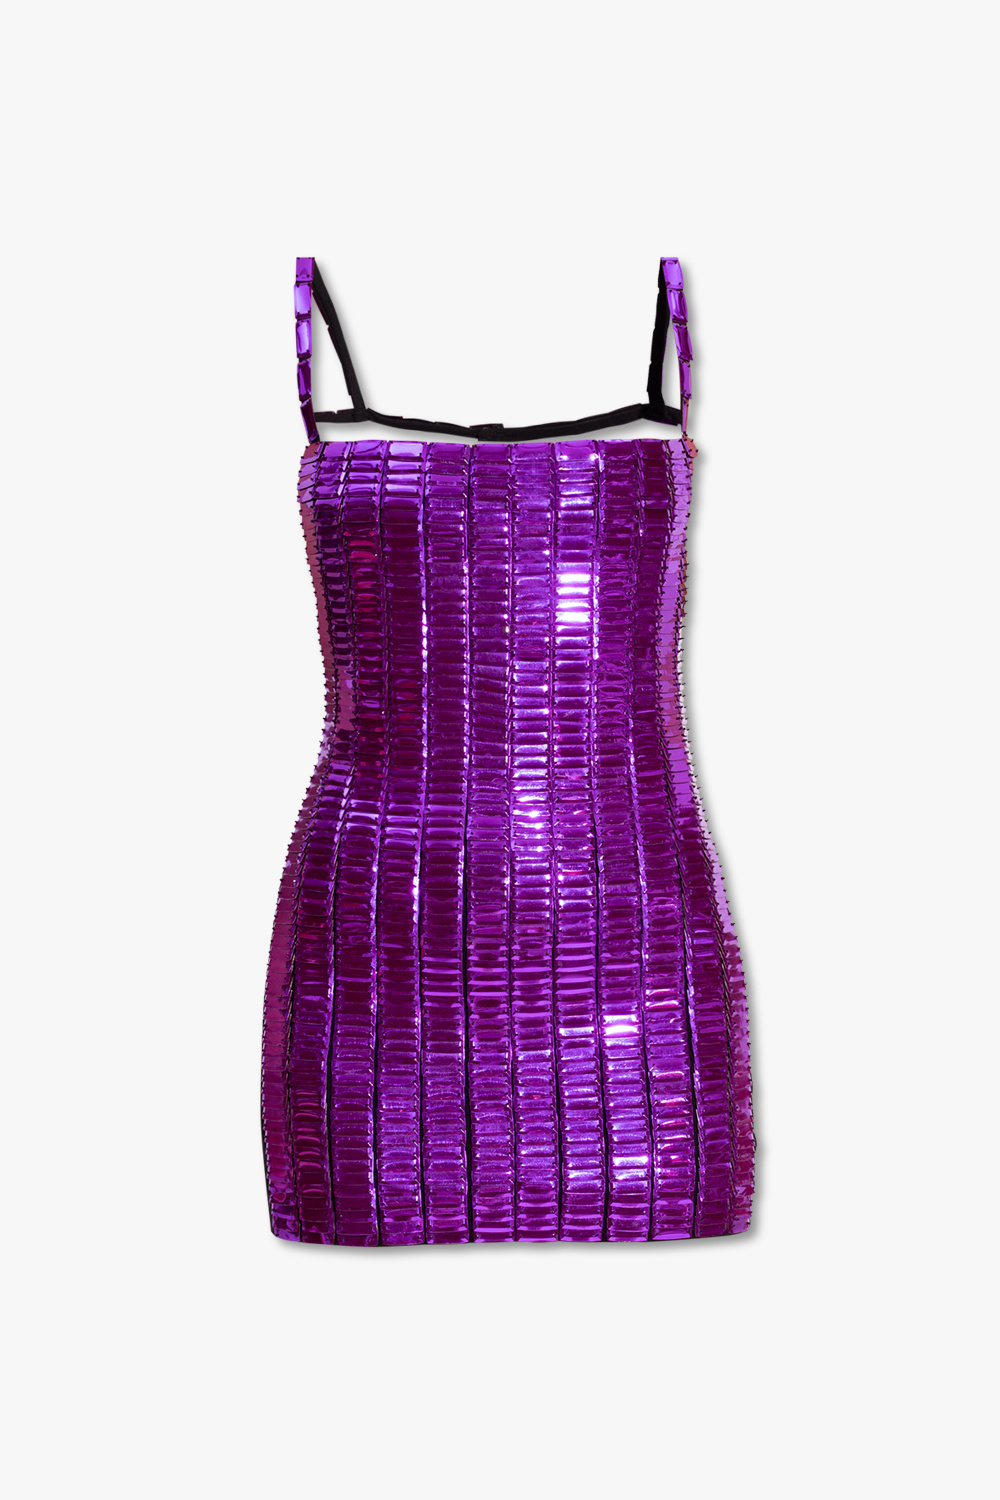 The Attico ‘Rue’ sequinned dress